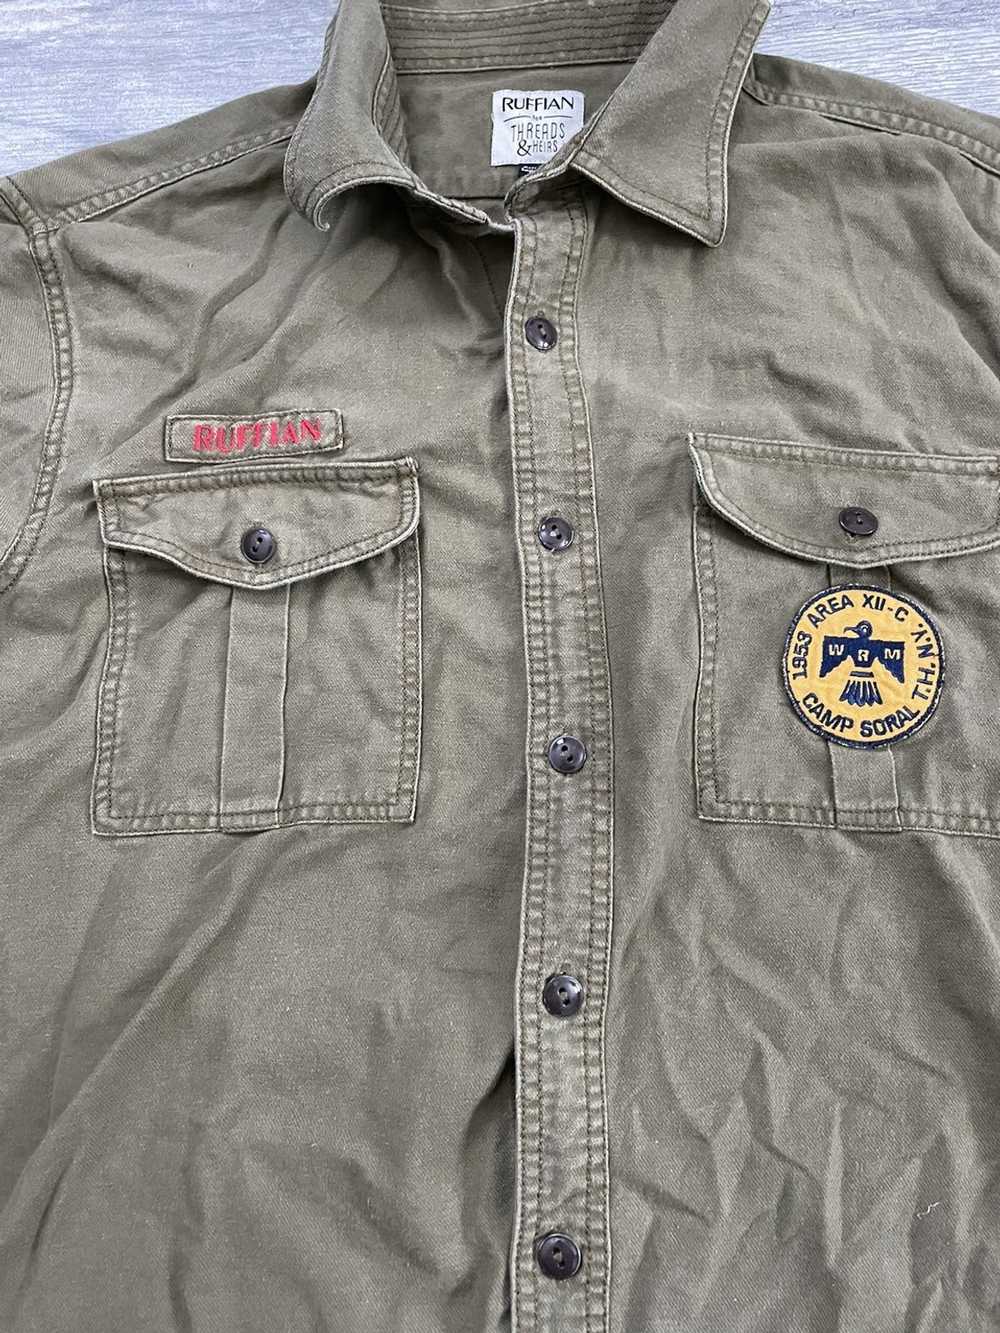 Vintage Vintage 1953 US Army Field Jacket - image 2